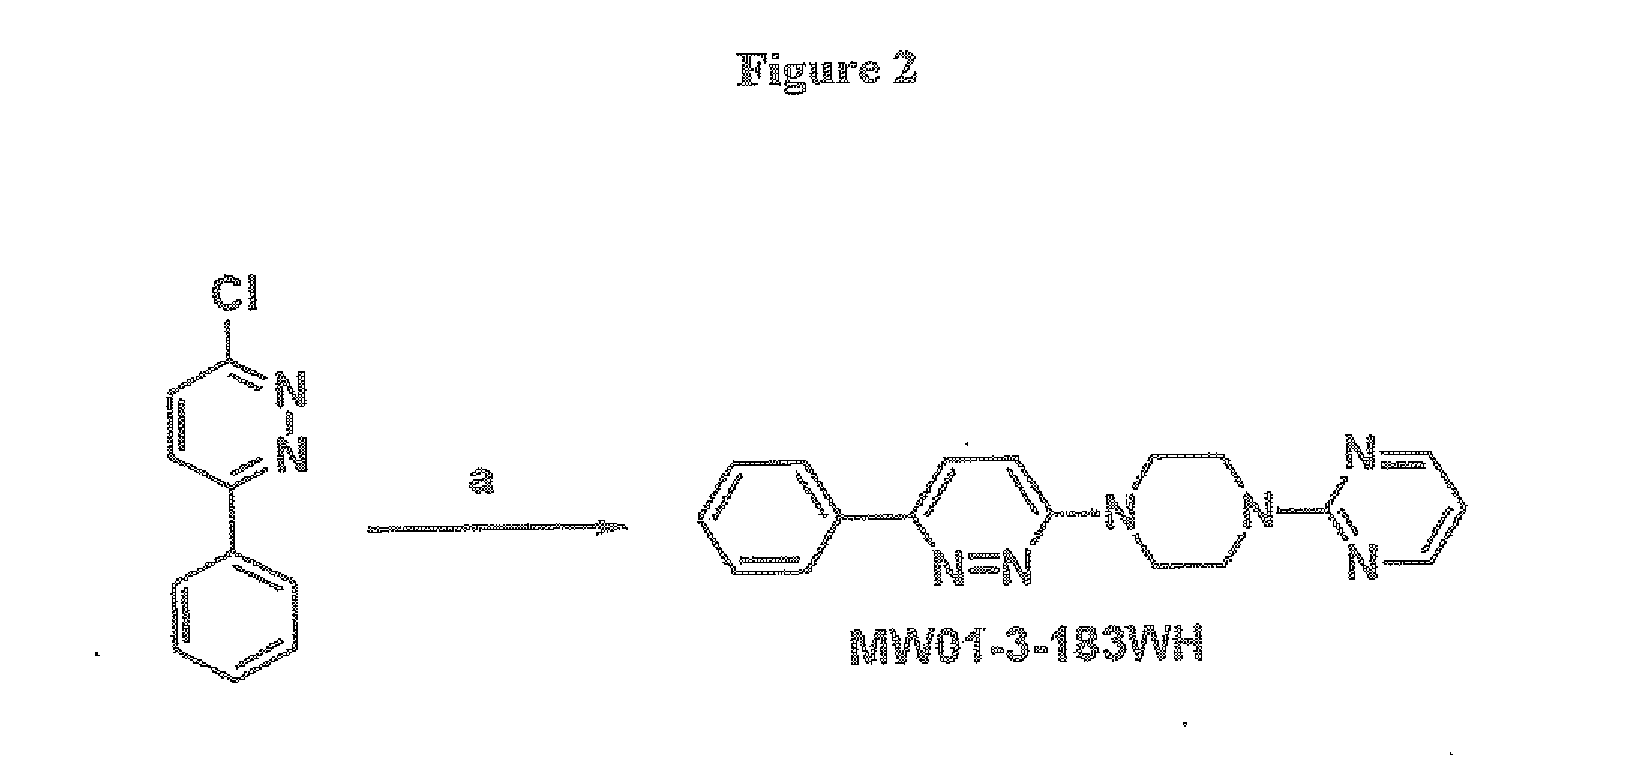 Formulations containing pyridazine compounds